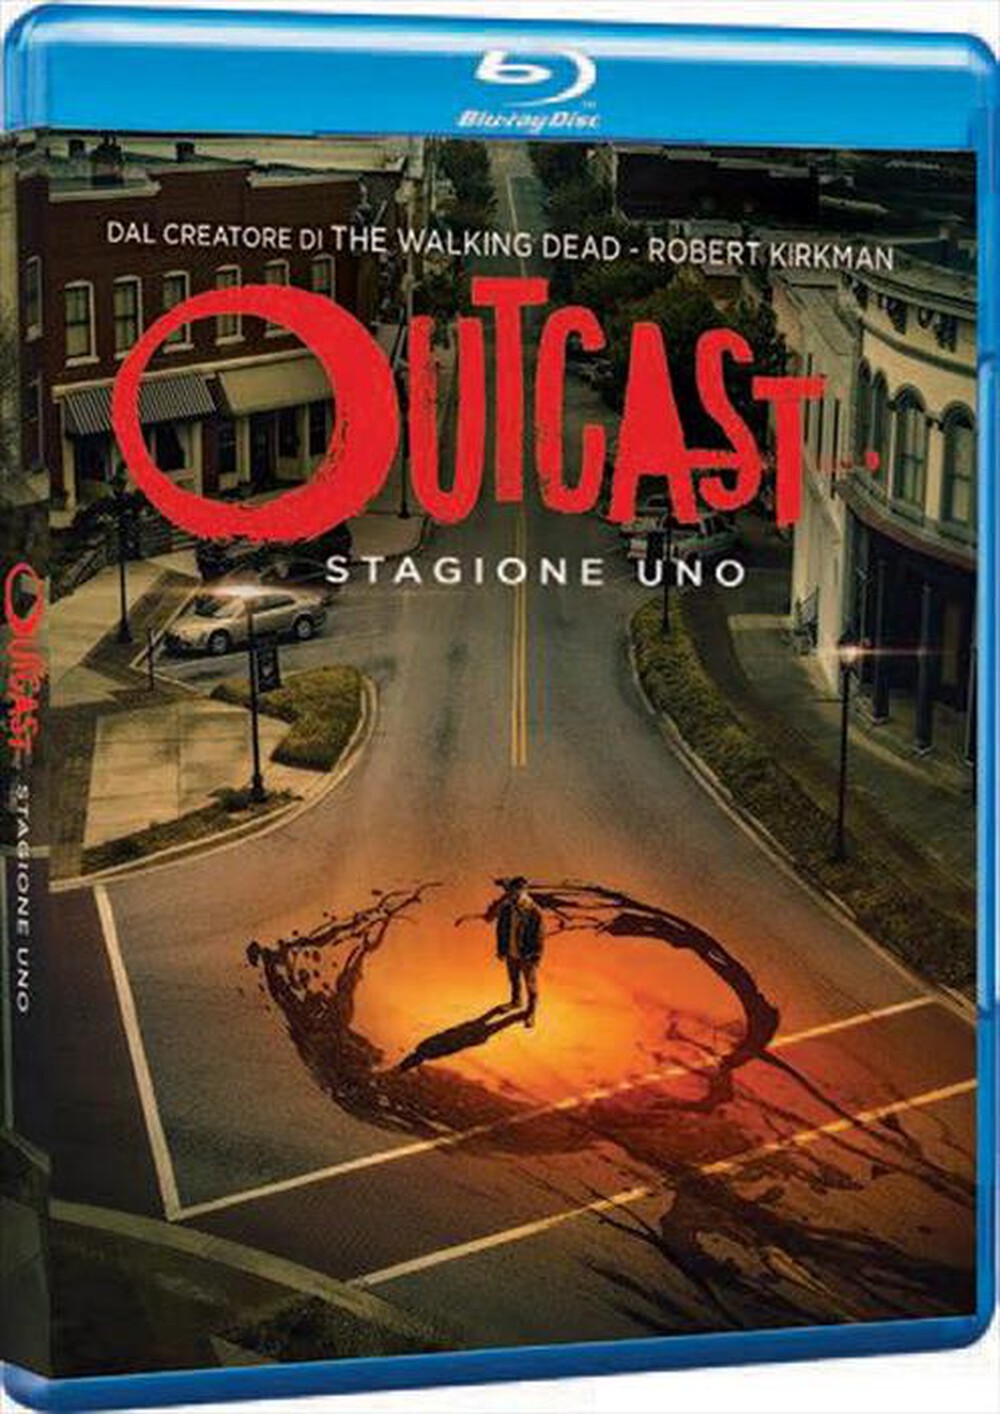 "WALT DISNEY - Outcast - Stagione 01 (3 Blu-Ray)"